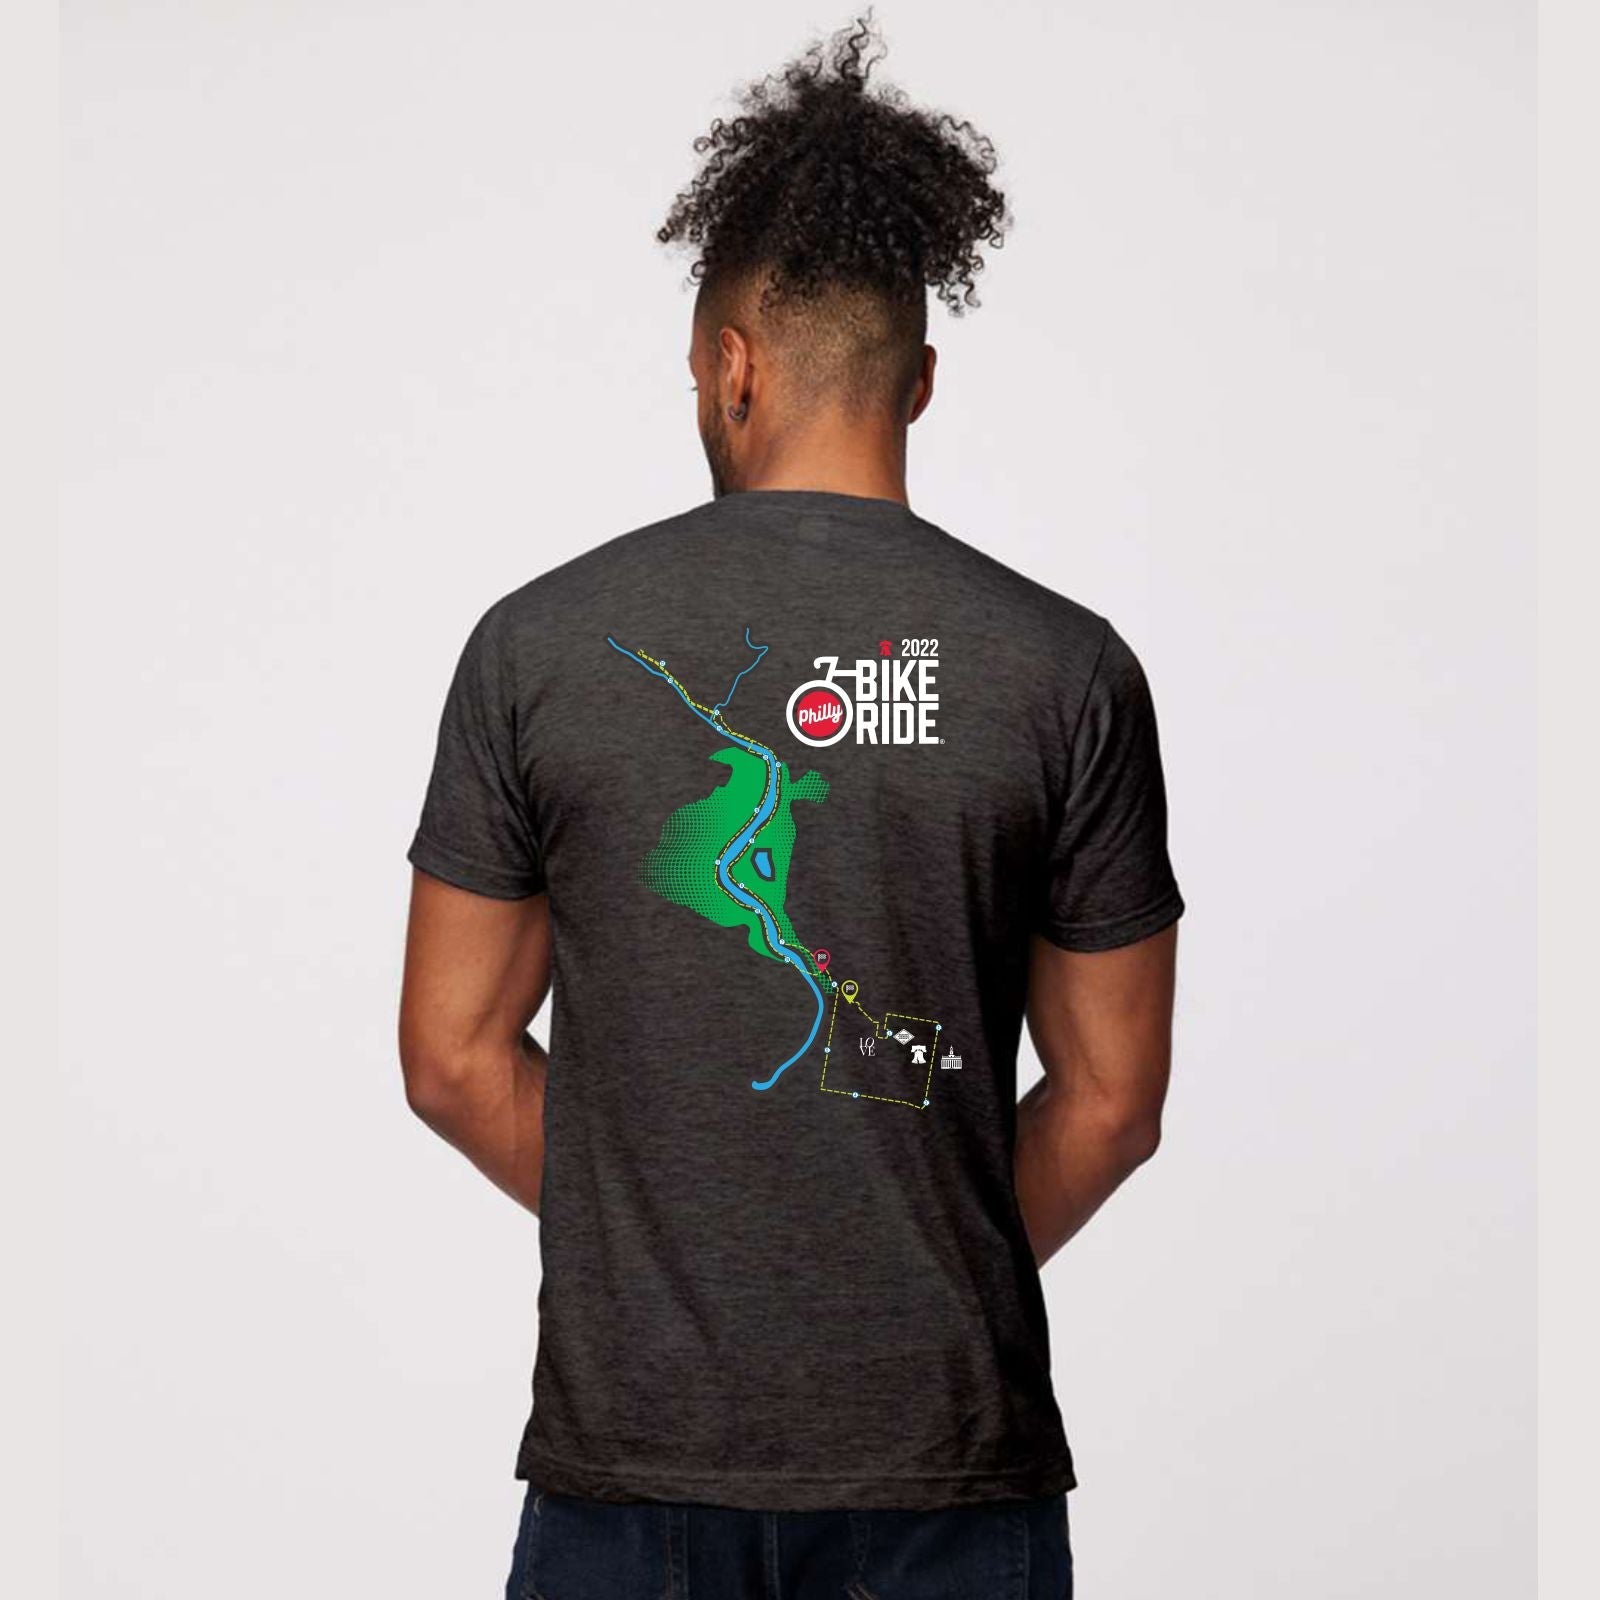 Philly Bike Ride: Men's SS Fashion Tee - Black Heather - '2022 Course' Design